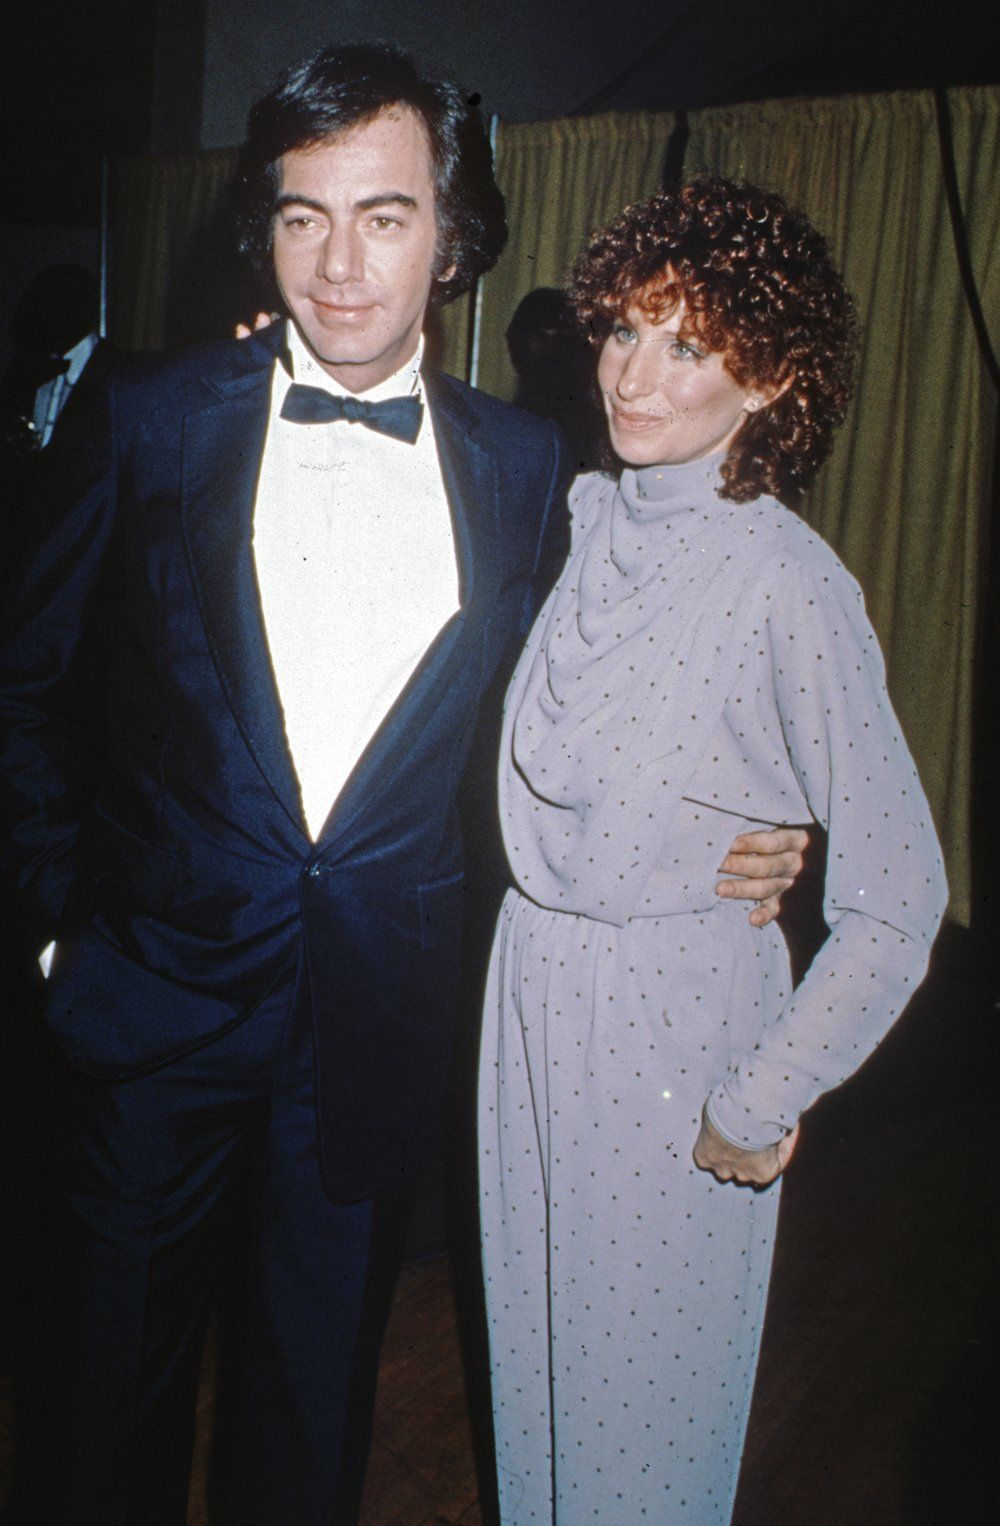 Neil Diamond and Barbra Streisand at the 1980 Grammy Awards.